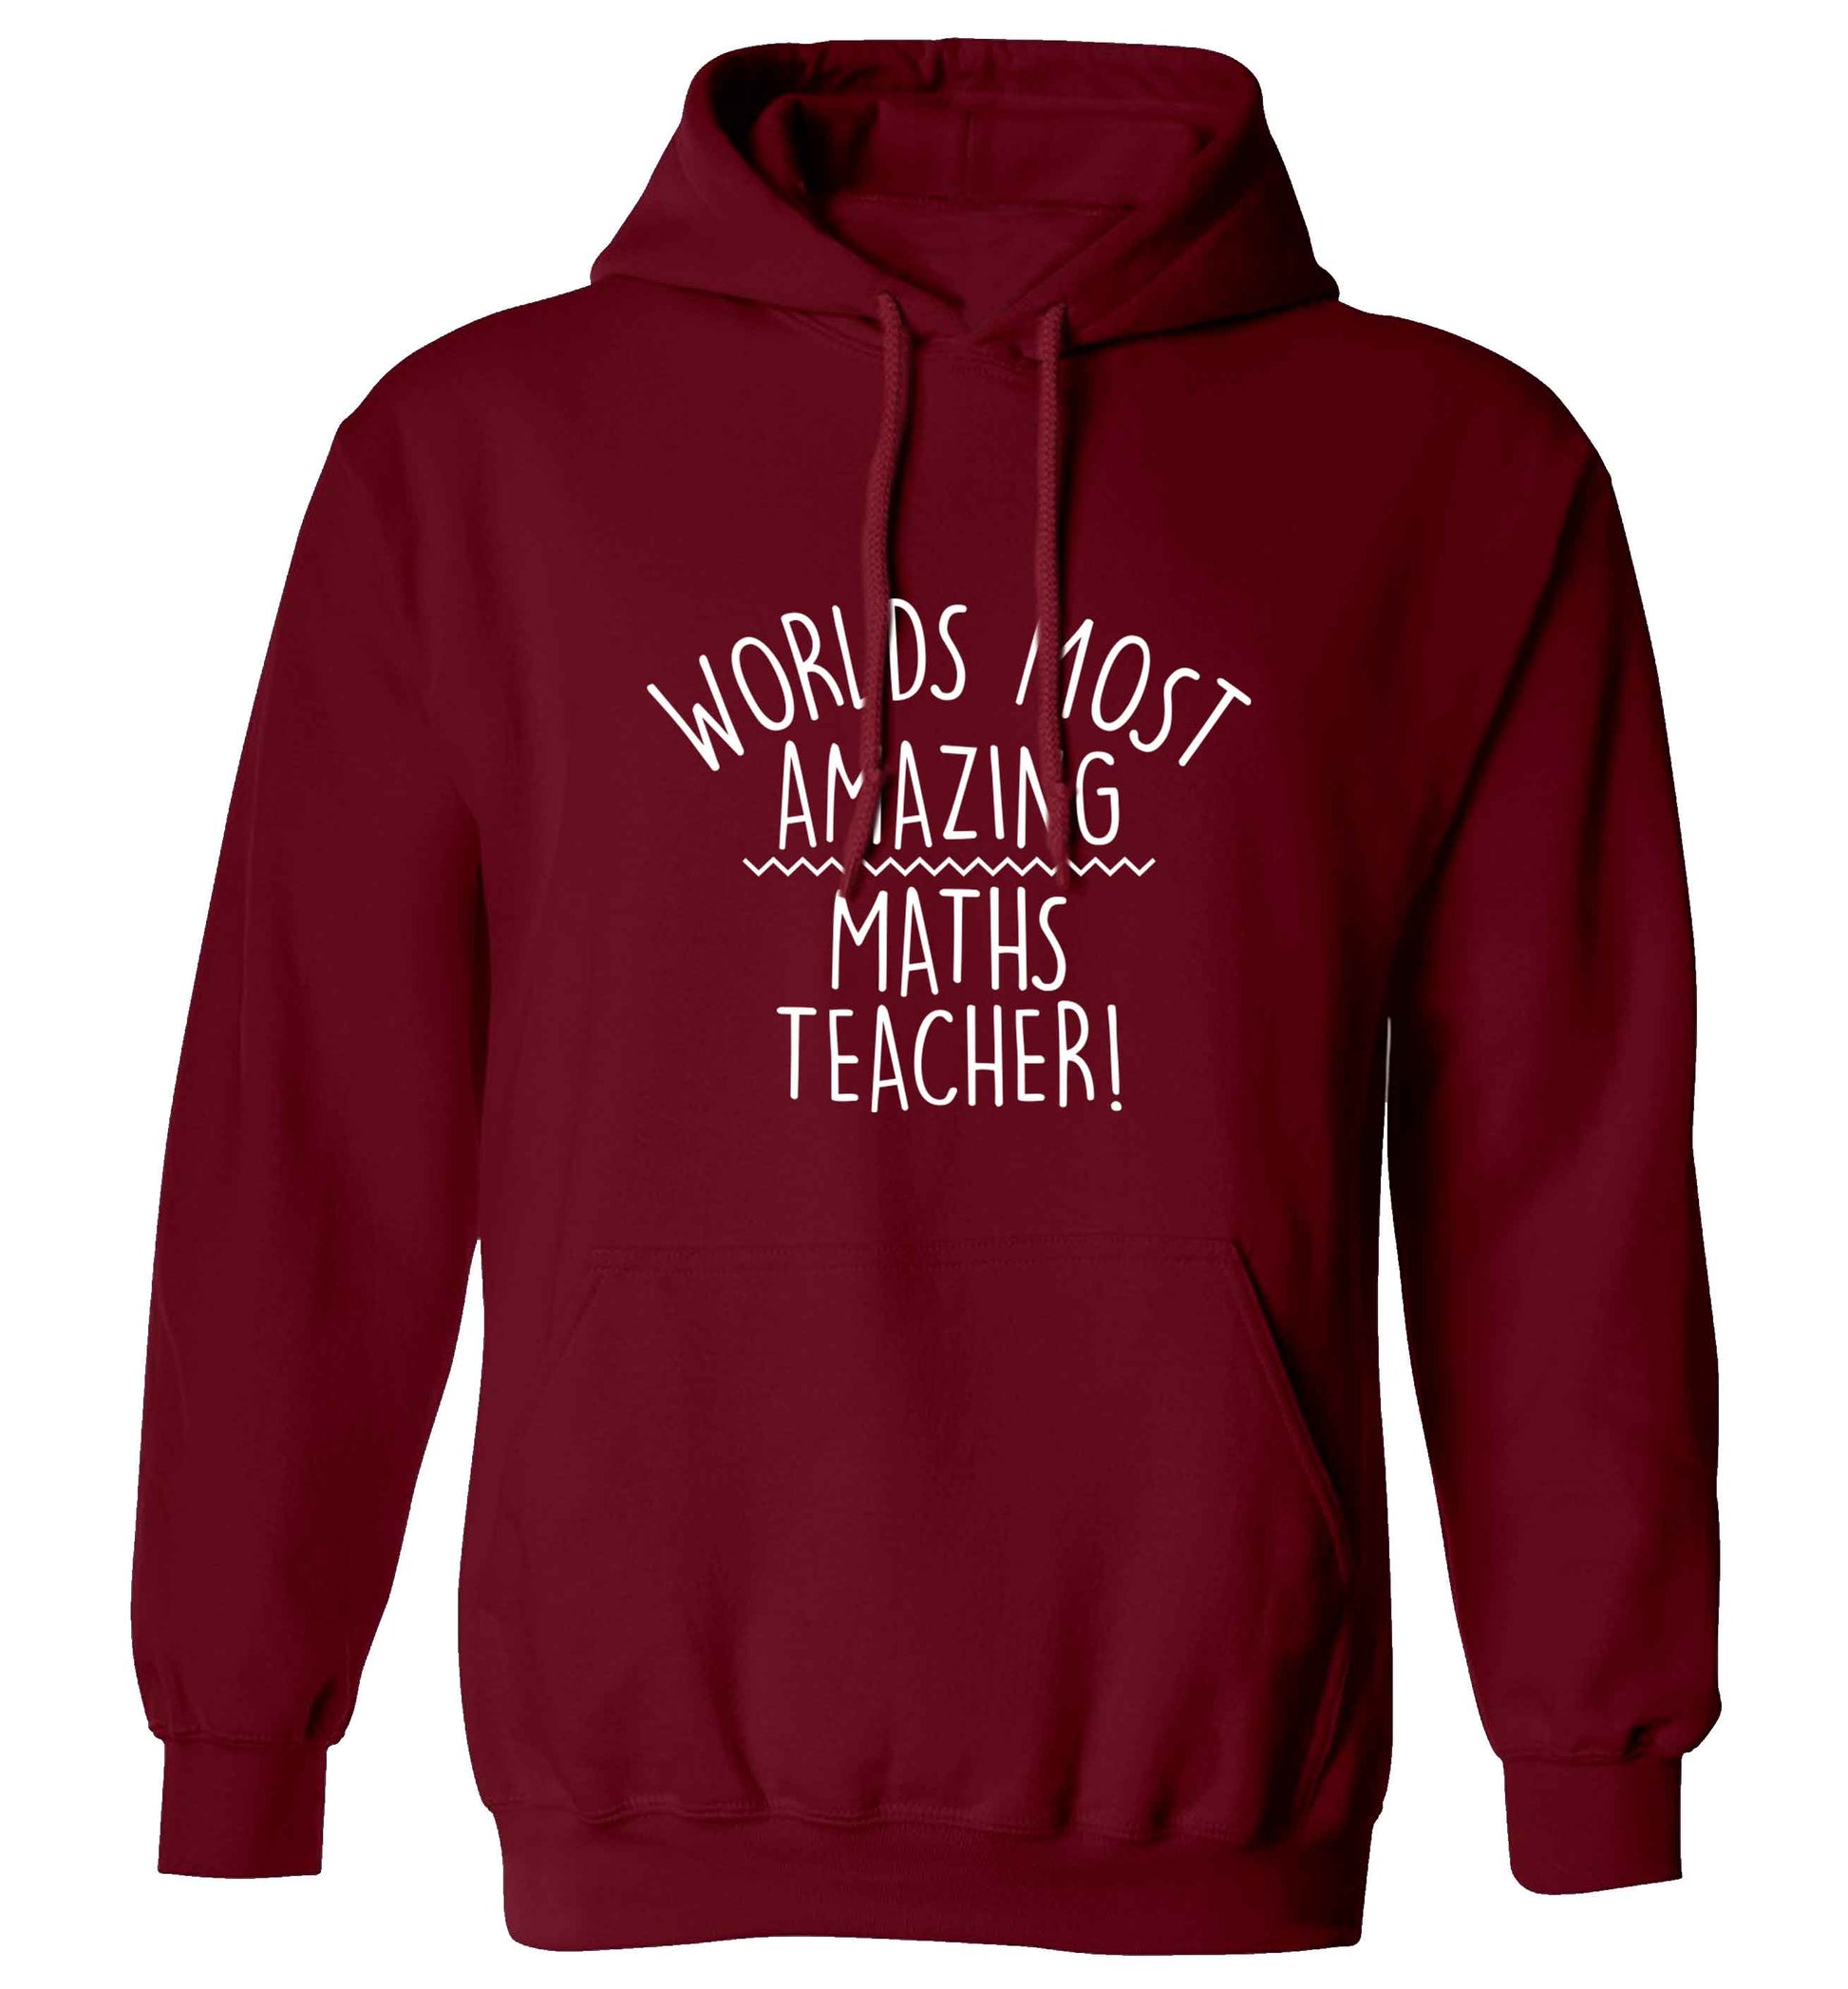 Worlds most amazing maths teacher adults unisex maroon hoodie 2XL